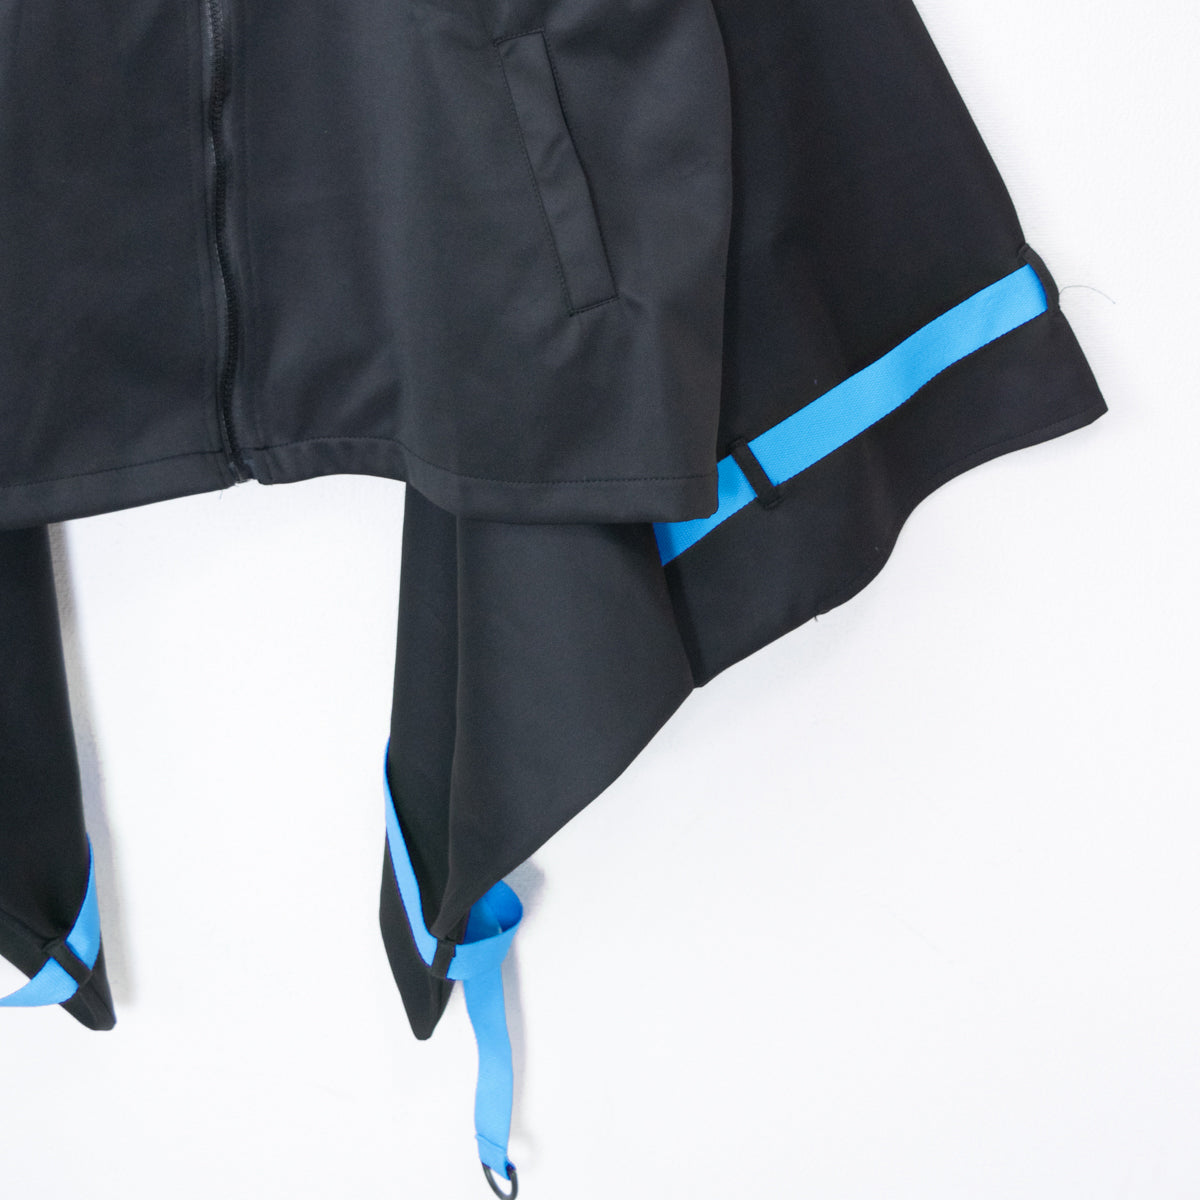 ACDC RAG CYBER PUNK Uzurai Kimono Jacket NEON BLUE BLACK